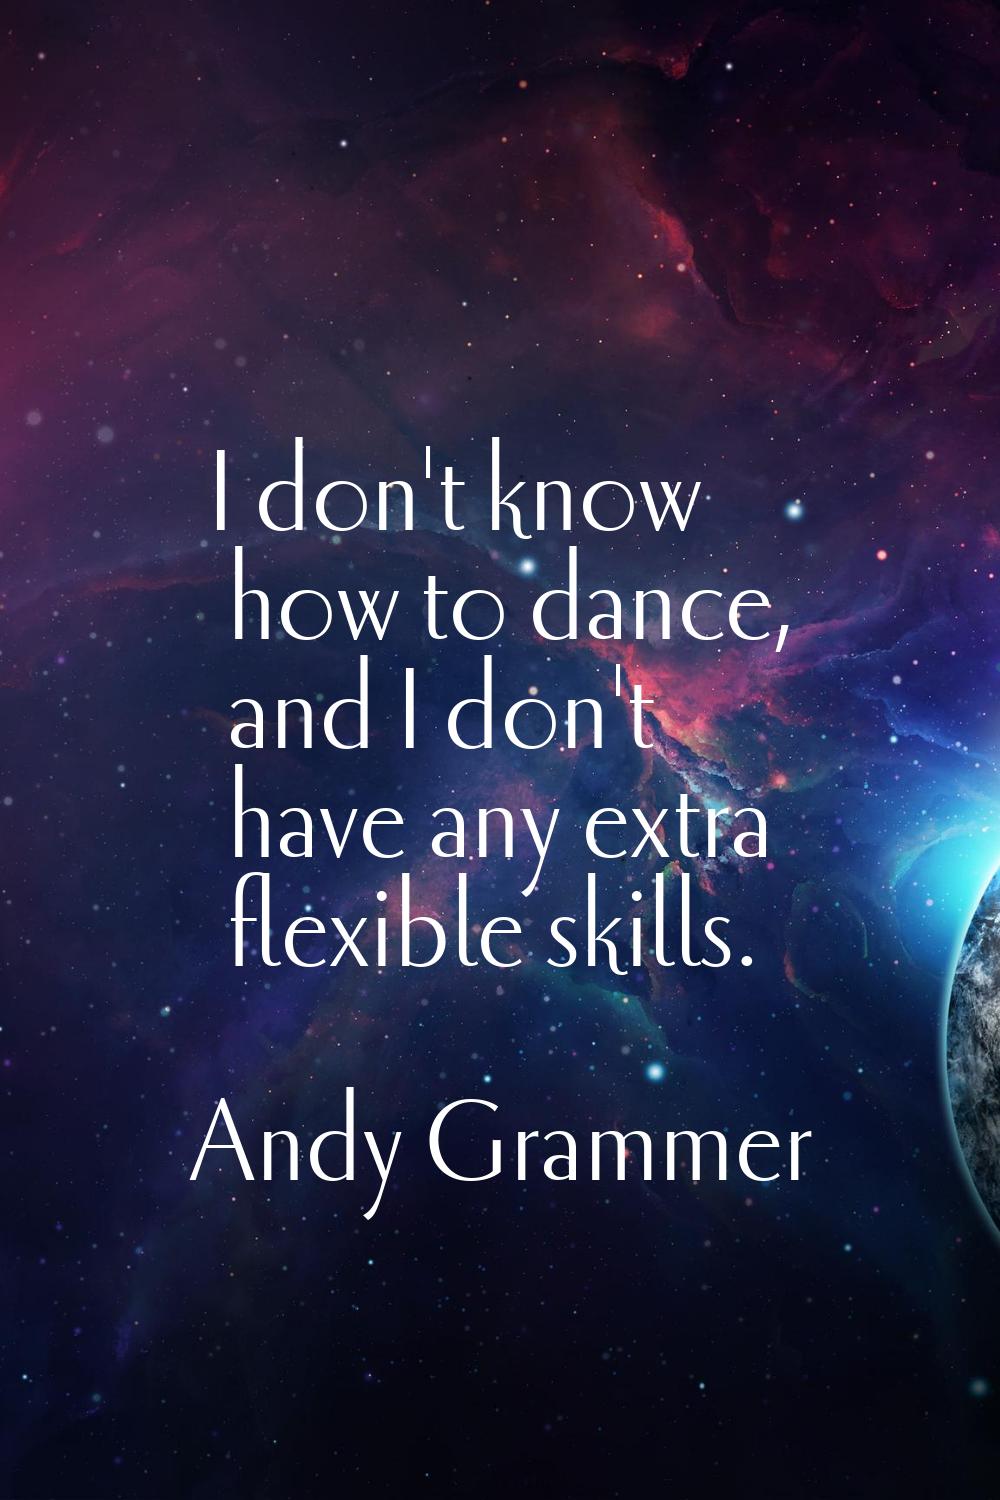 I don't know how to dance, and I don't have any extra flexible skills.